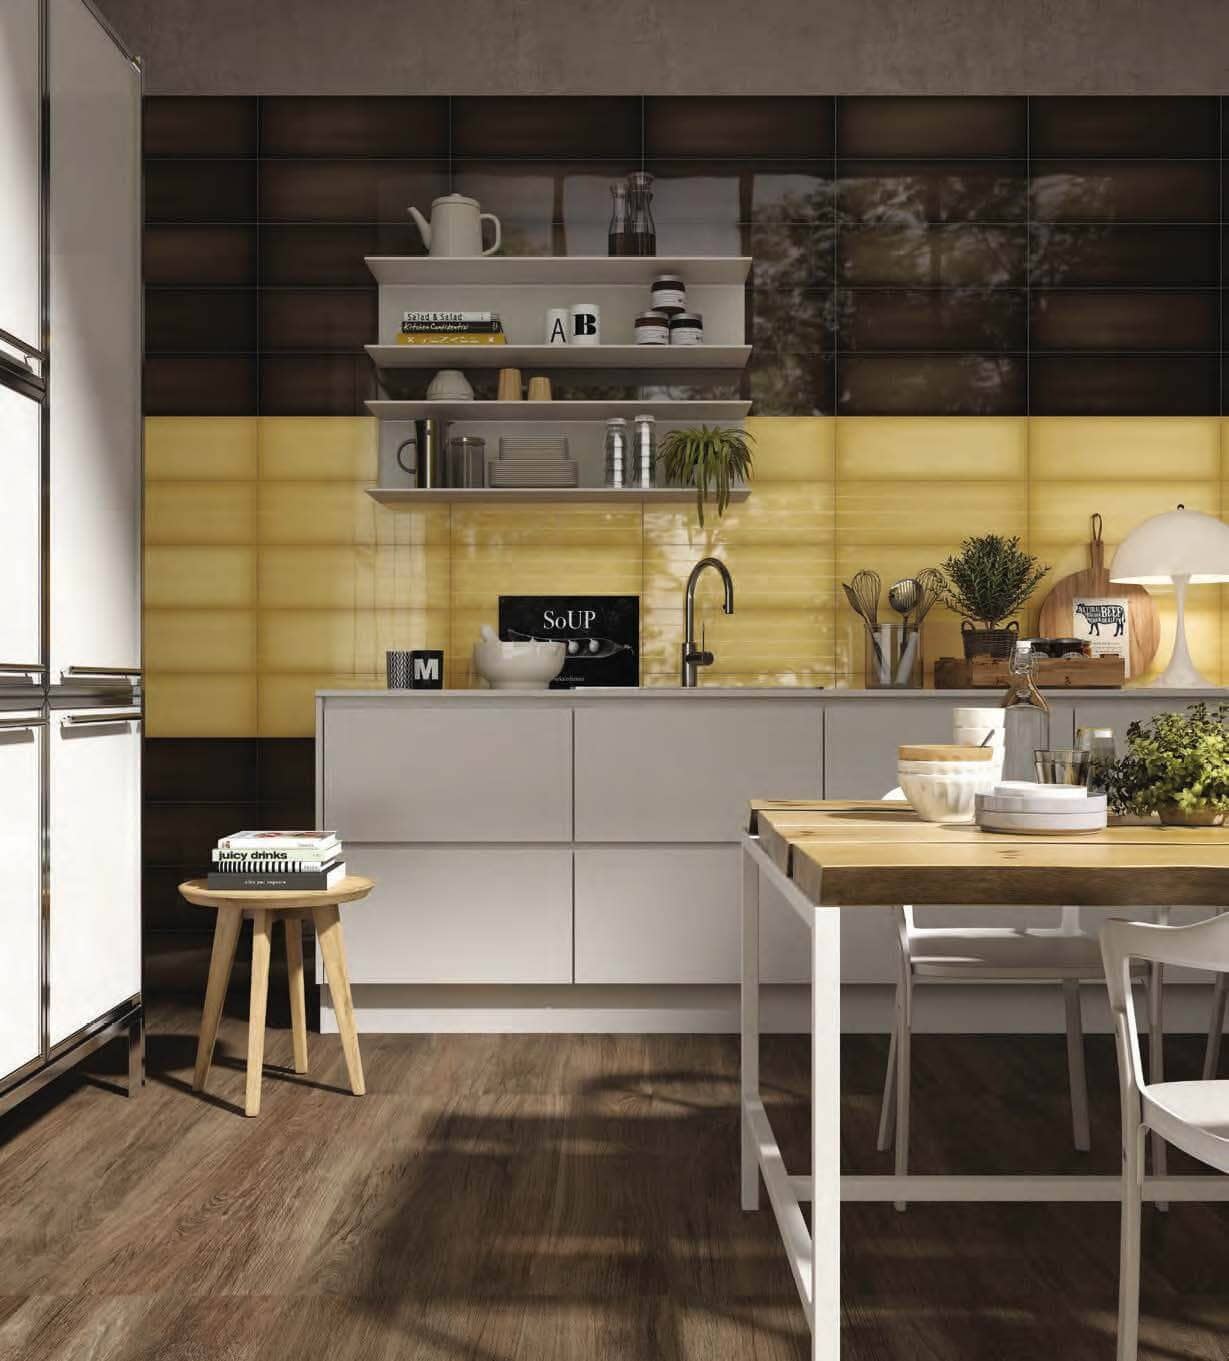 Brown and yellow tile kitchen backsplash